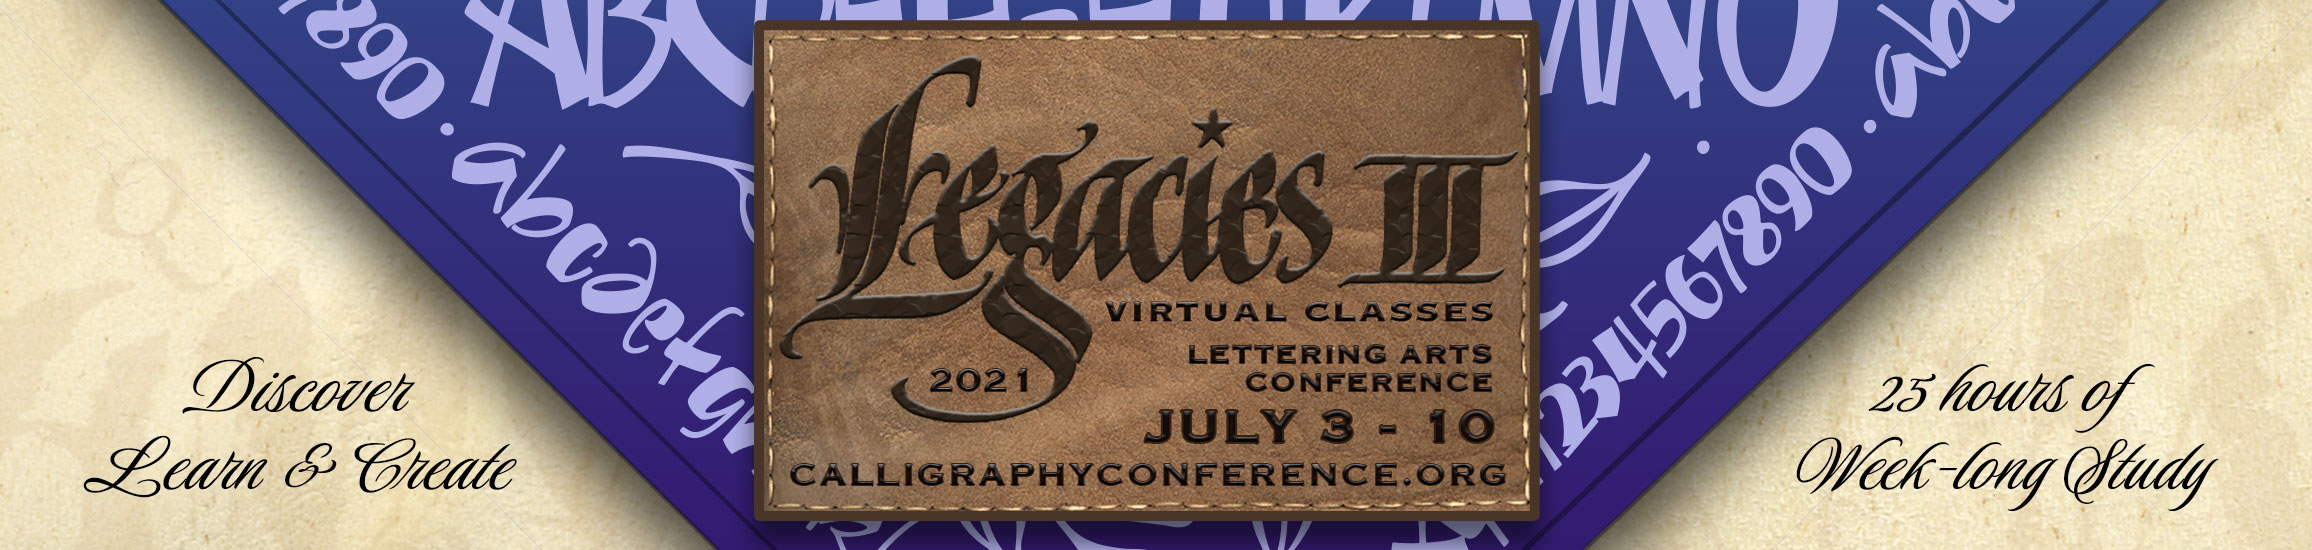 Legacies III International Lettering Arts Conference